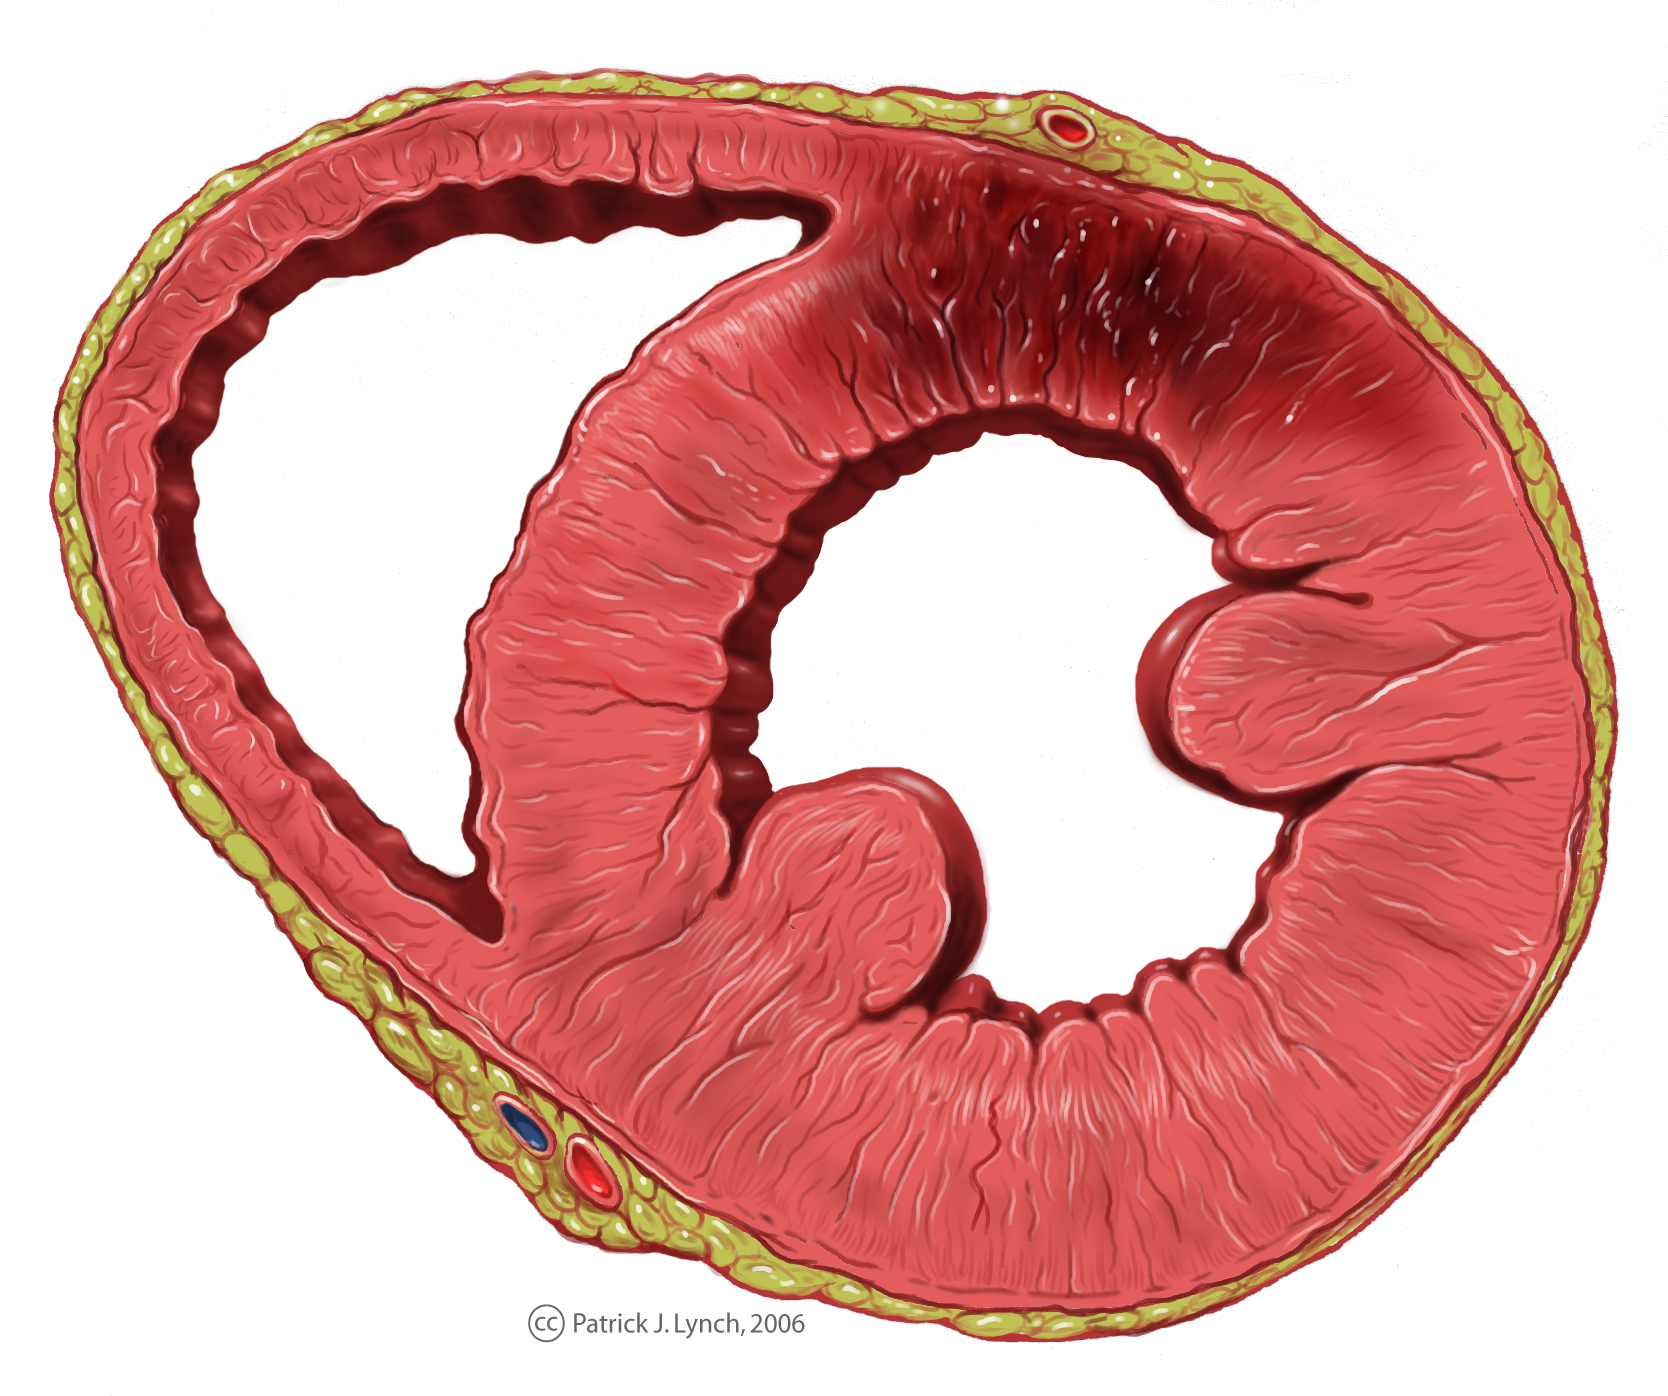 Regional ischemia in a myocardial infarction